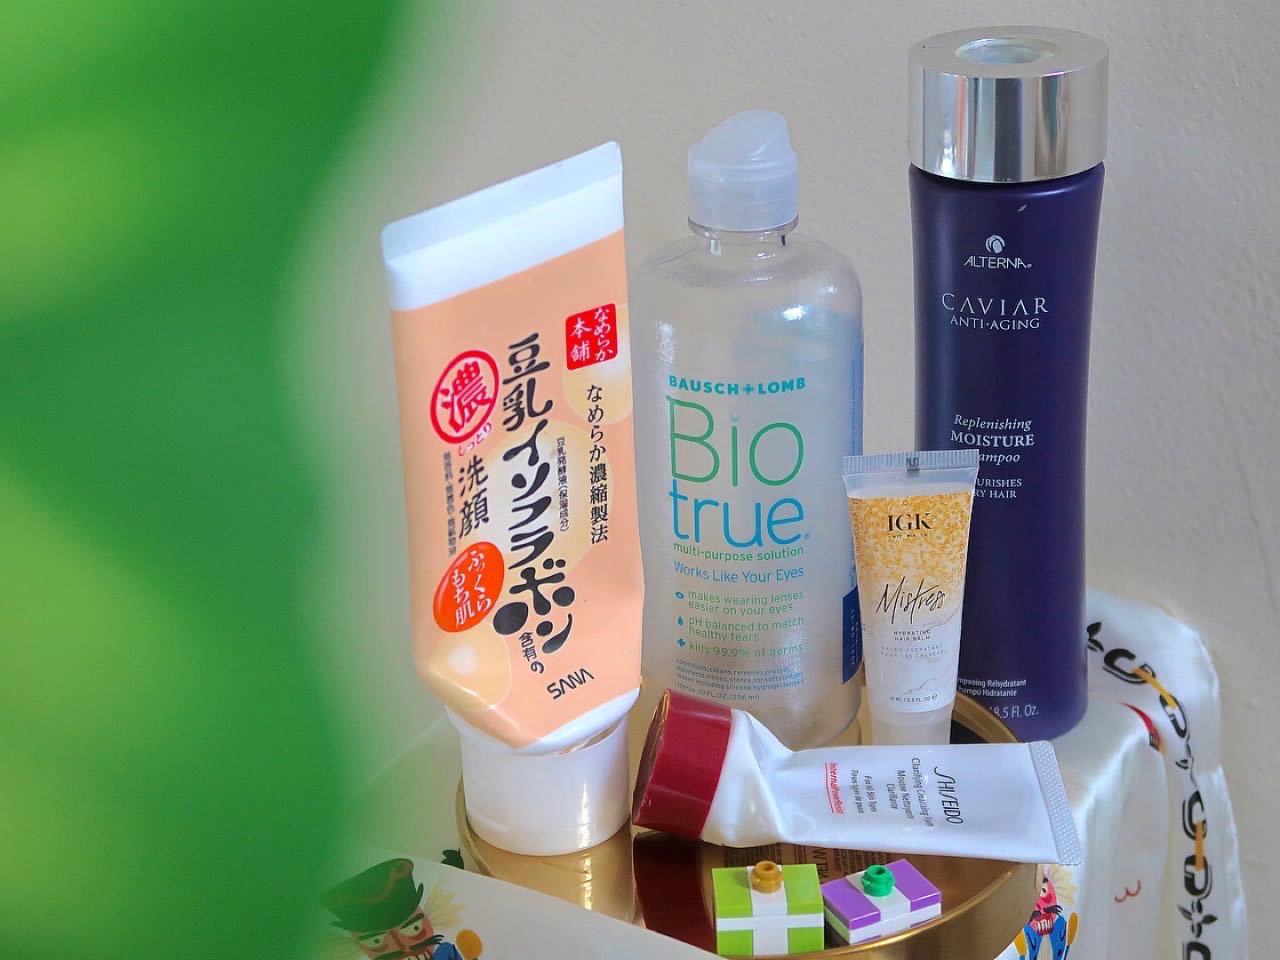 Sana 豆乳,Shiseido 资生堂,BAUSCH+LOMB 博士伦,Alterna,IGK